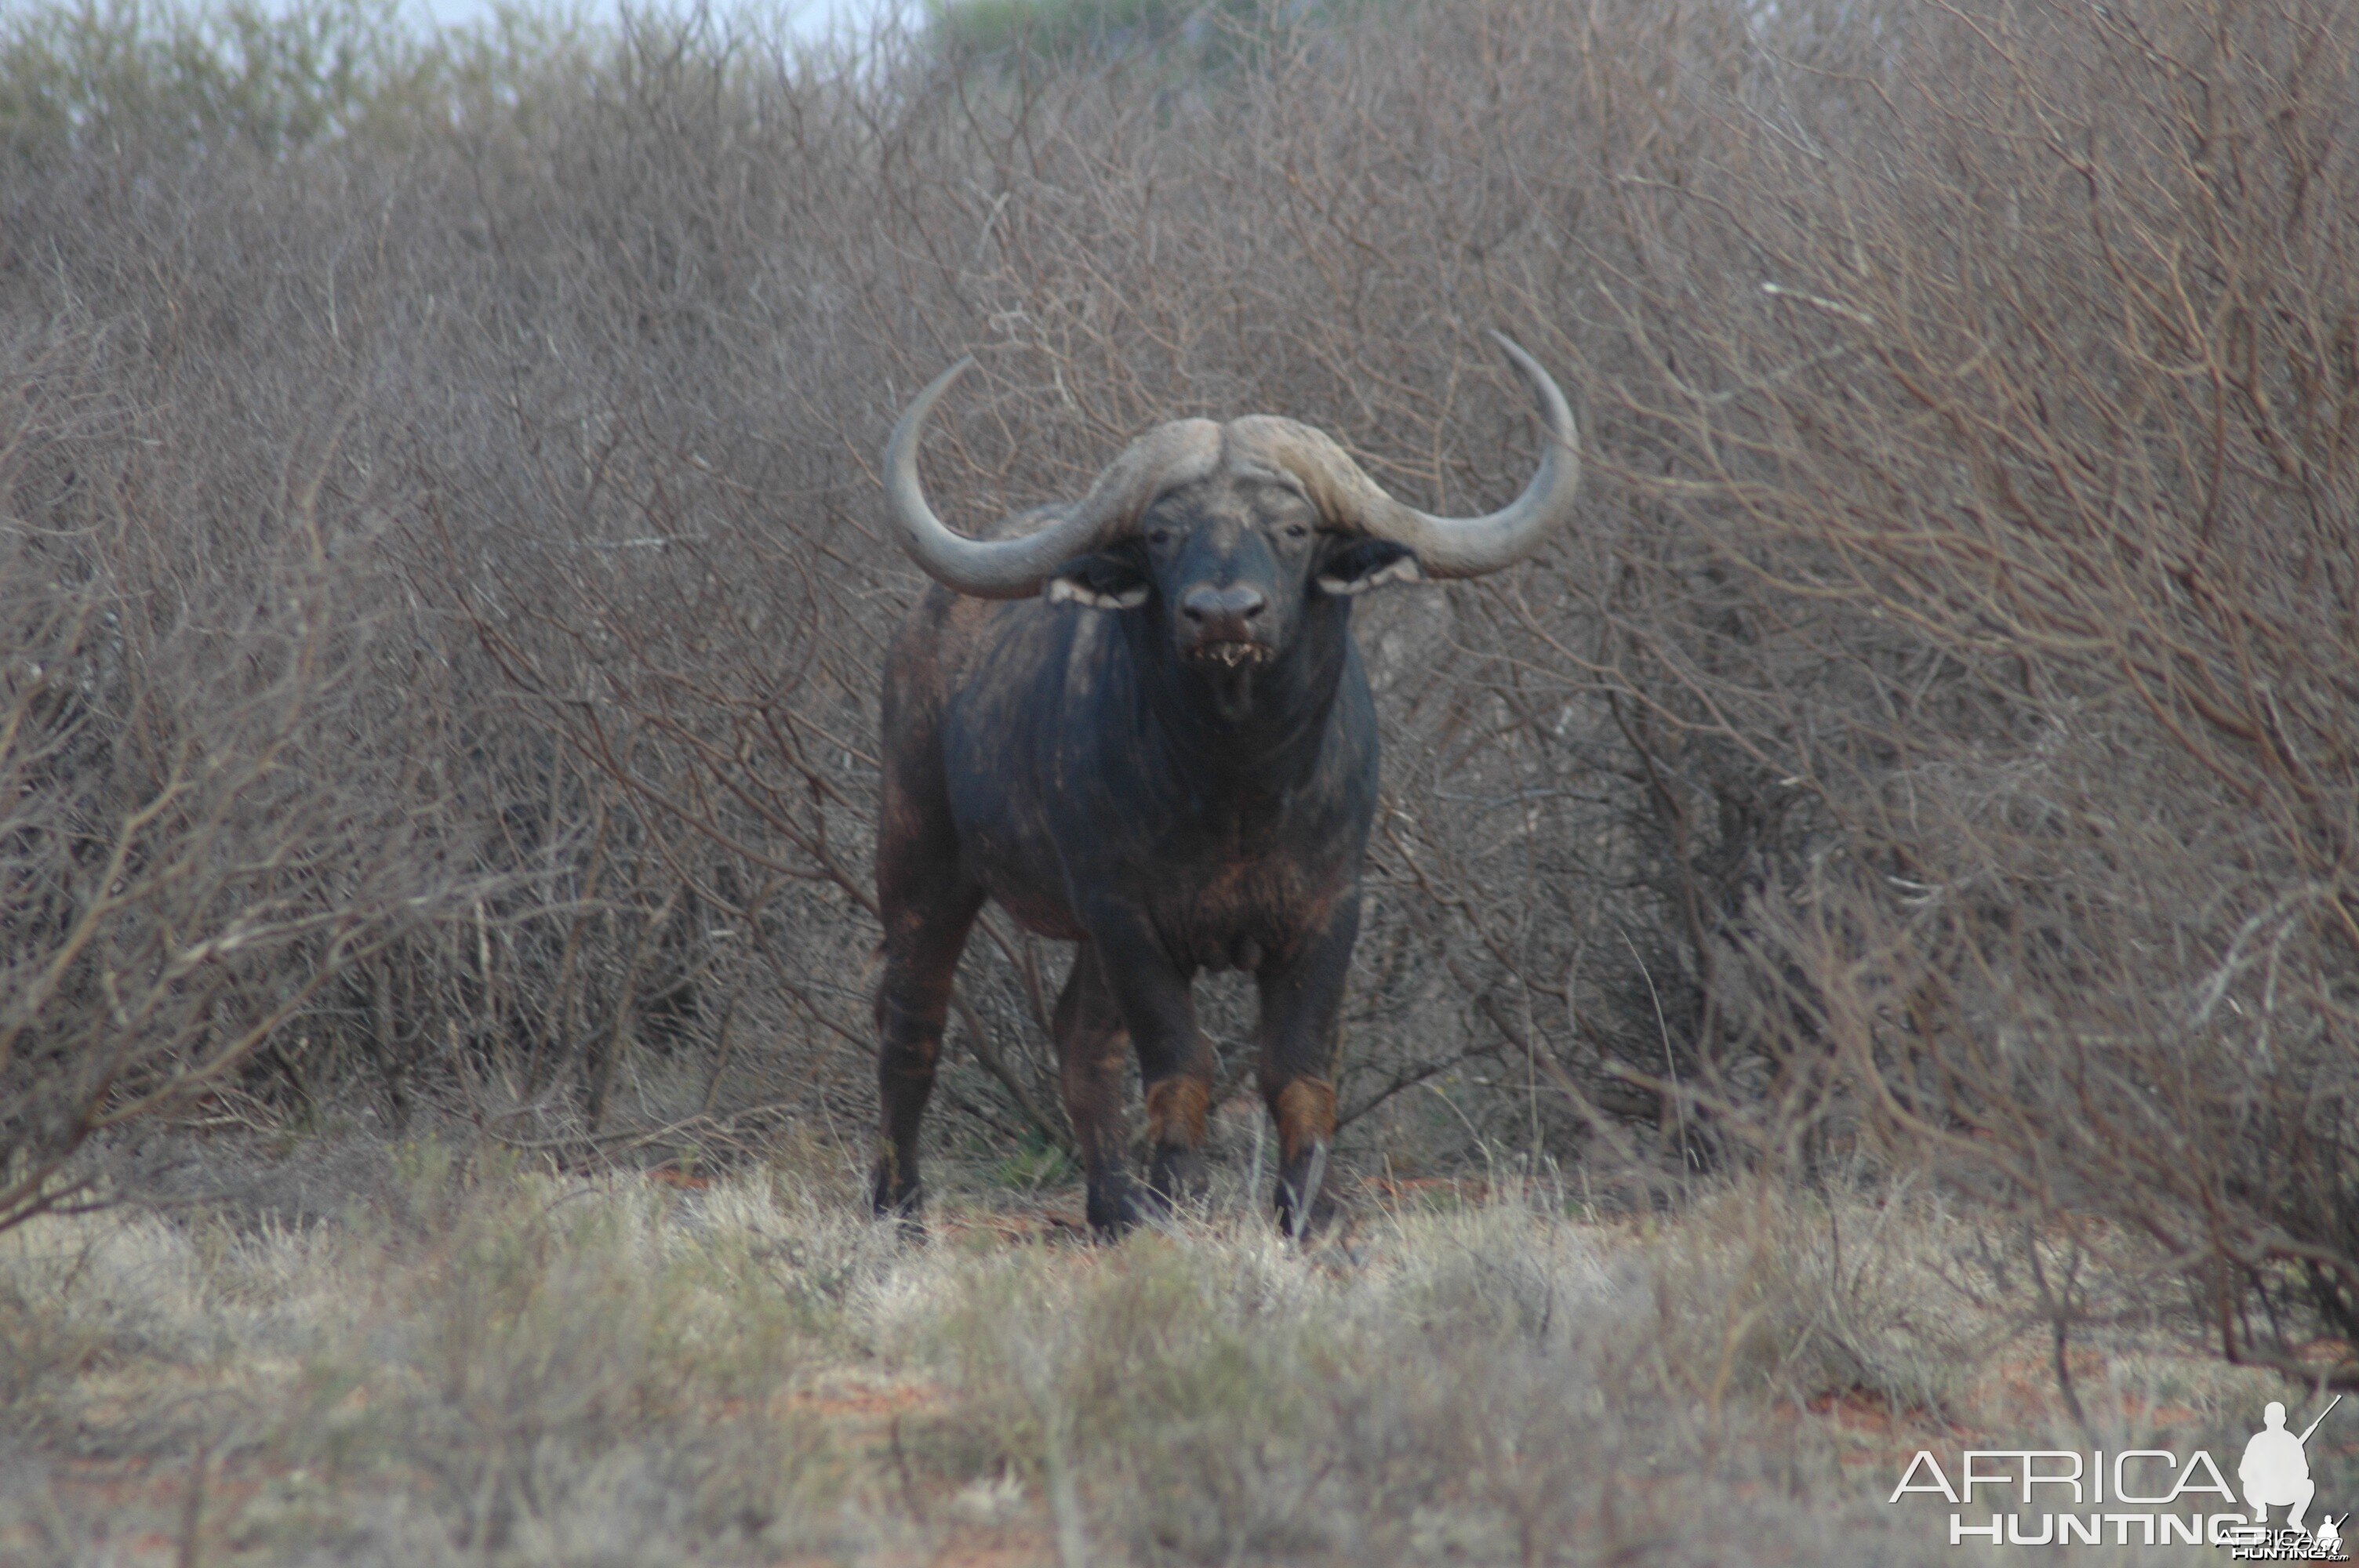 53" Breeder bull at Wintershoek